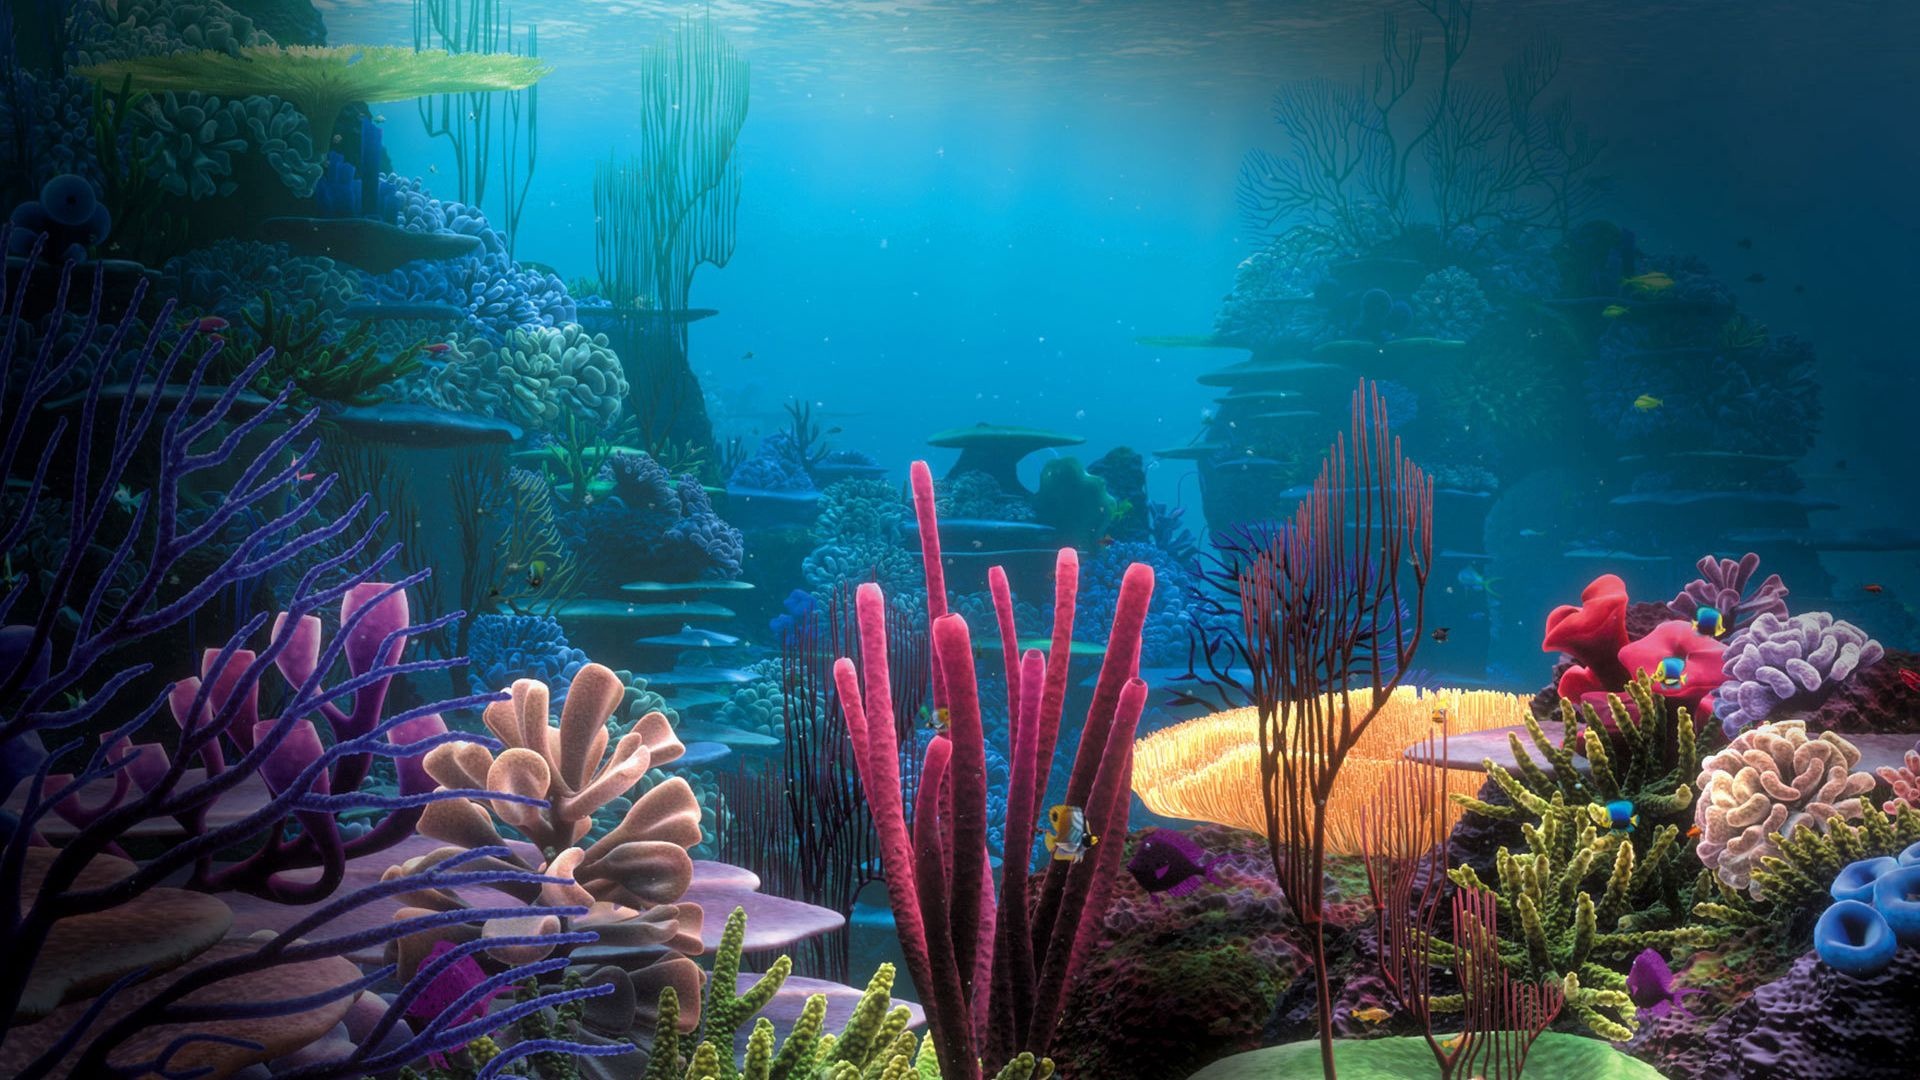 Aquarium Wallpapers on WallpaperDog